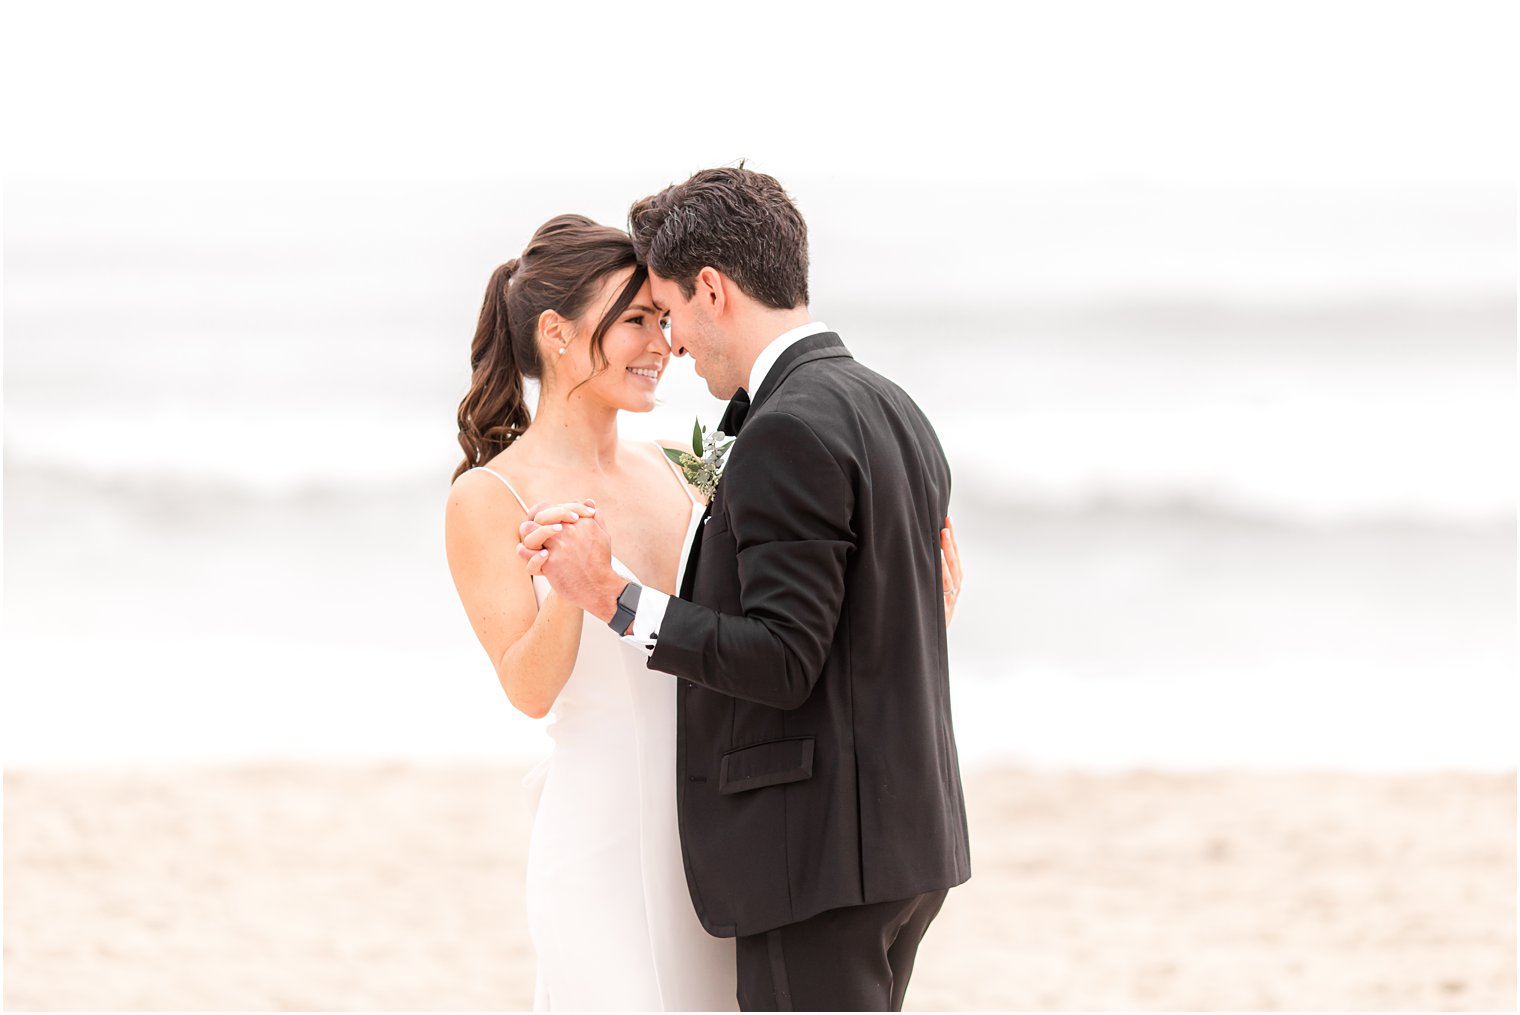 newlyweds dance on beach after New Jersey wedding